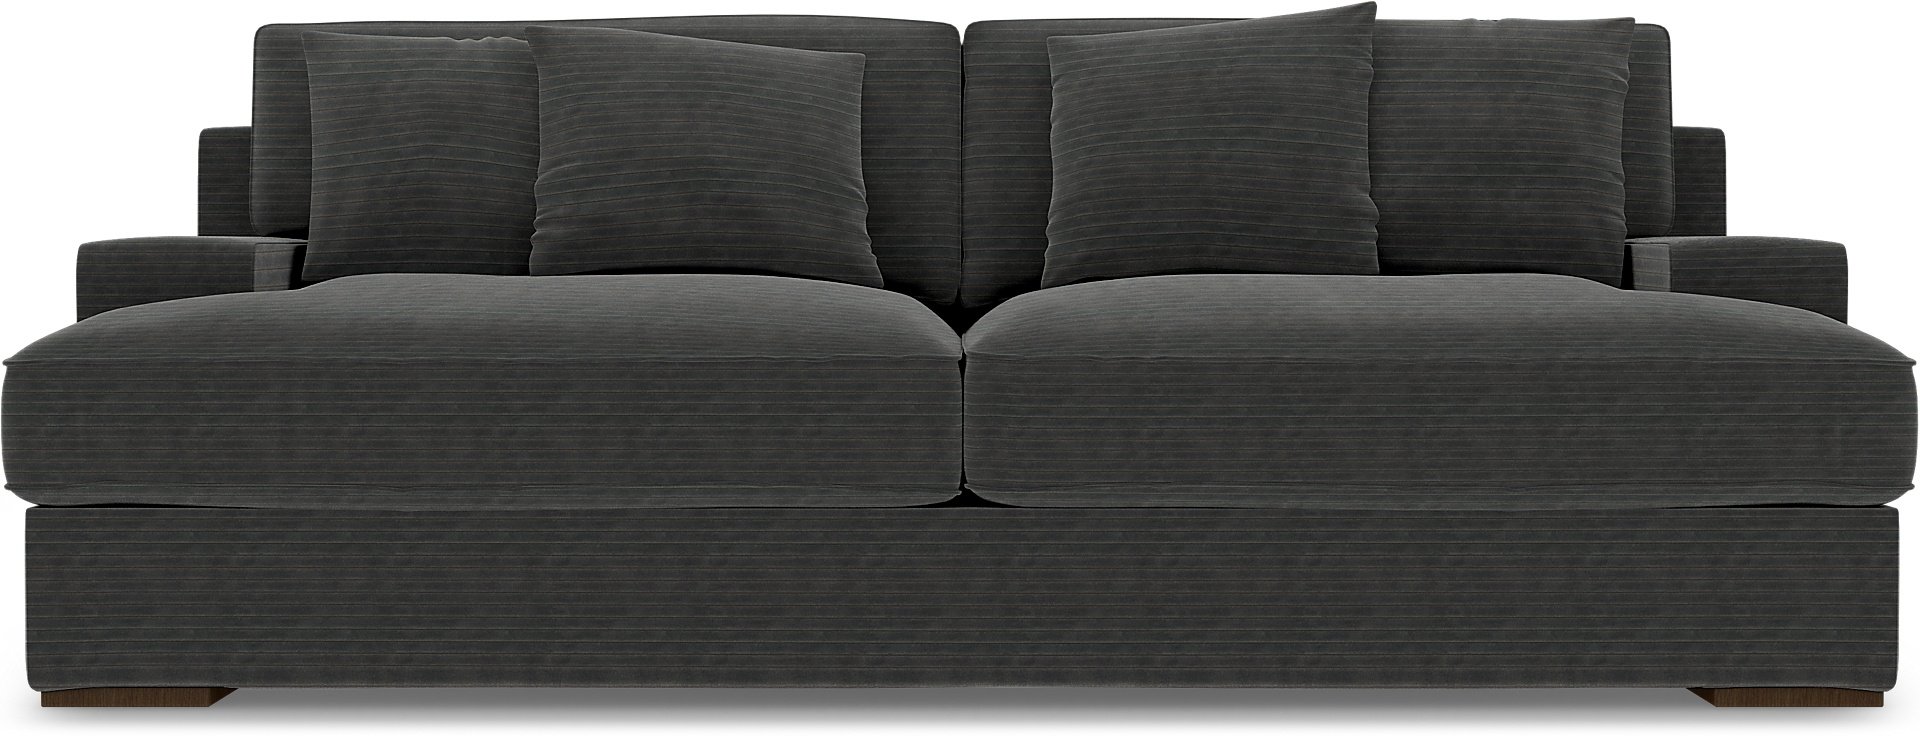 IKEA - Goteborg 3 Seater Sofa Cover, Licorice, Corduroy - Bemz